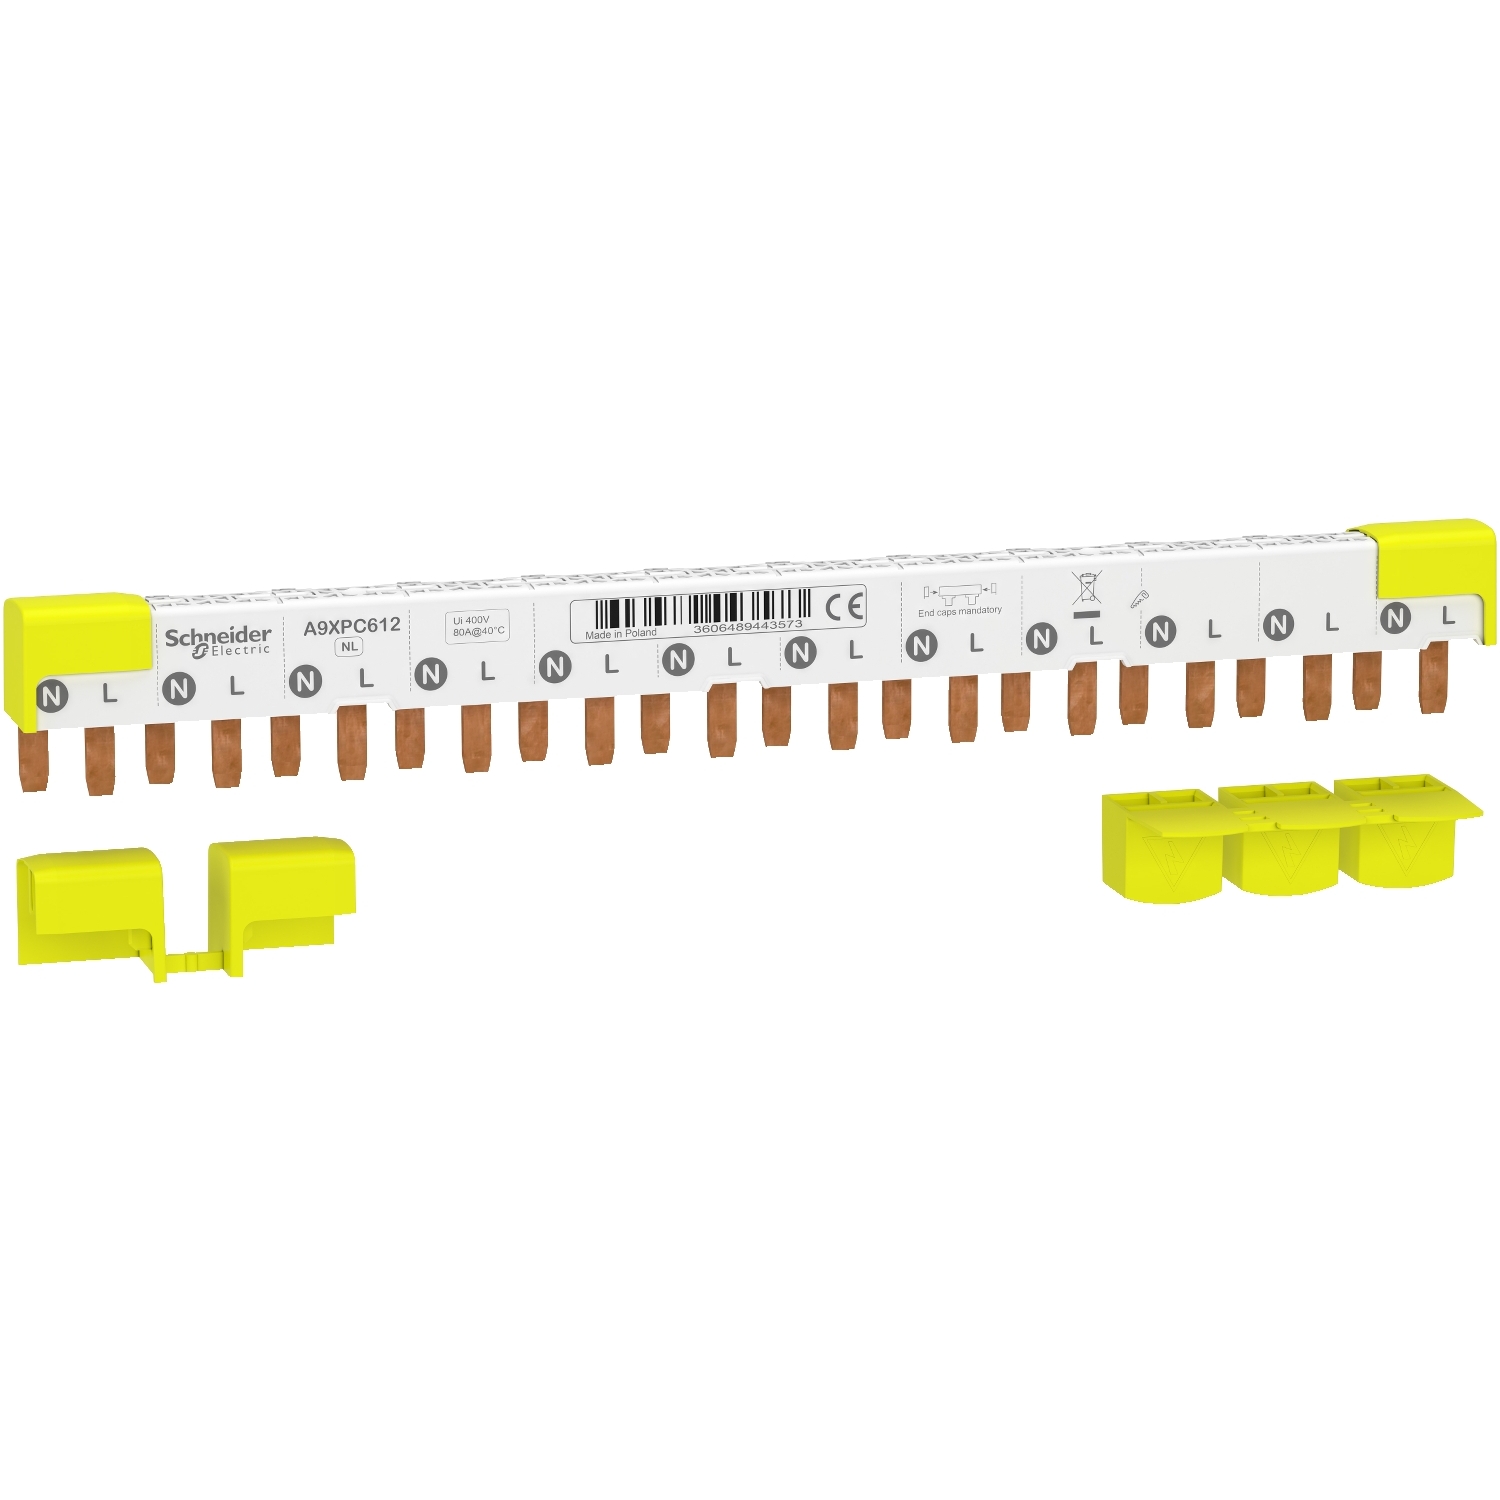 comb busbar, Acti9, 1L+N, 9 mm pitch, 12 modules, 80 A